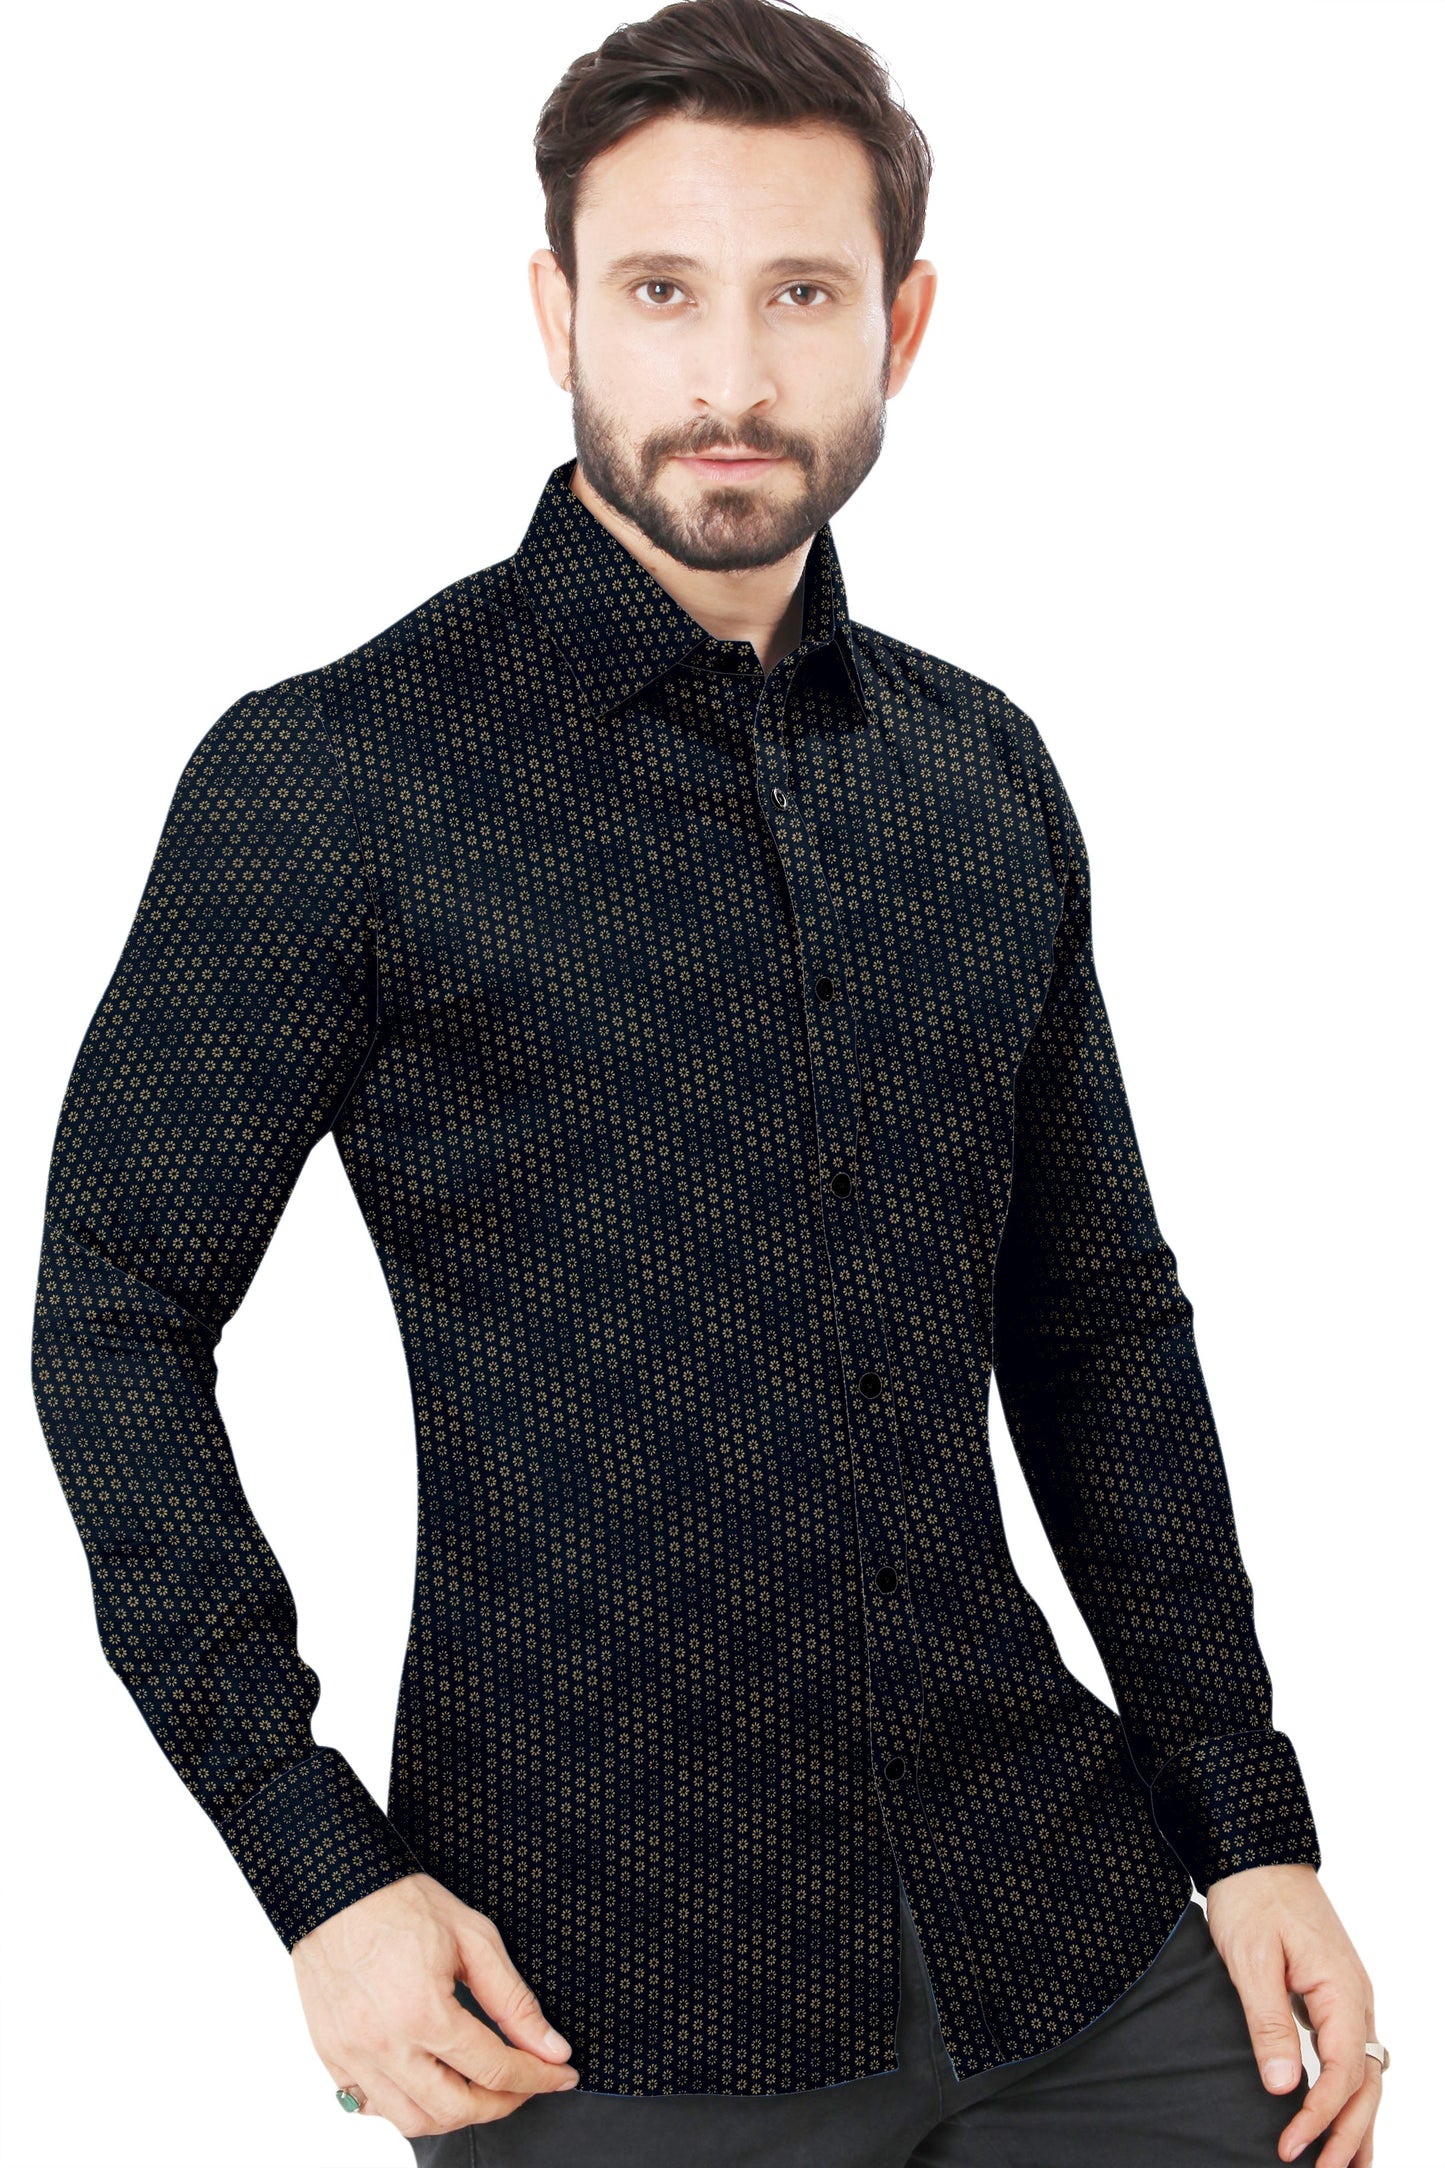 Men's Black Printed Casual Shirt Full Sleeves 100% Cotton 